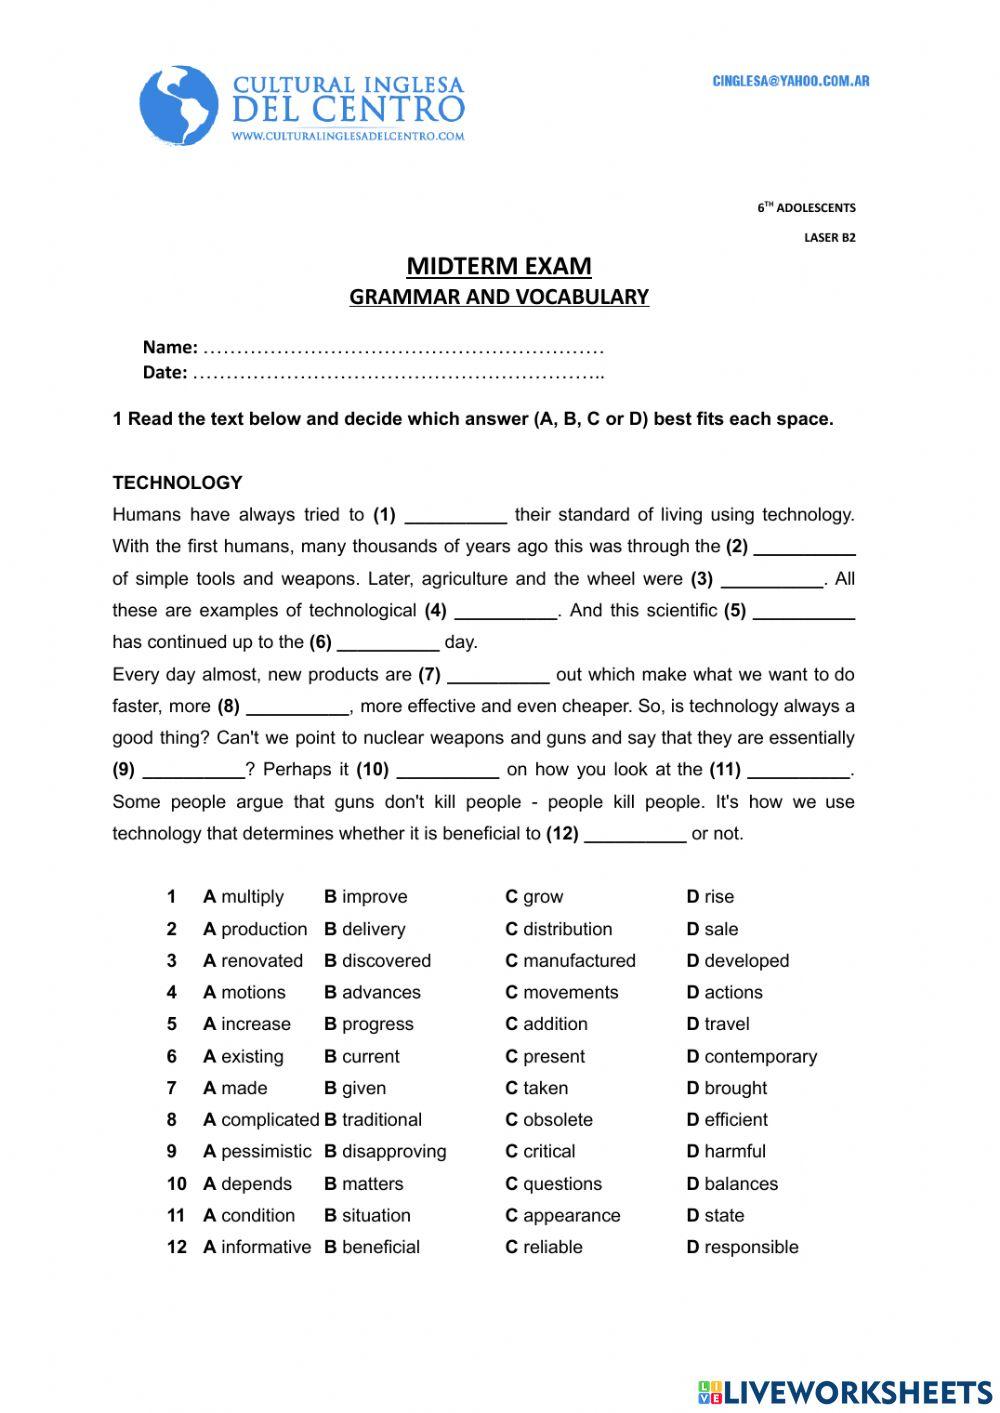 MIDTERM - Grammar and Vocabulary Test (6th Adolescent)